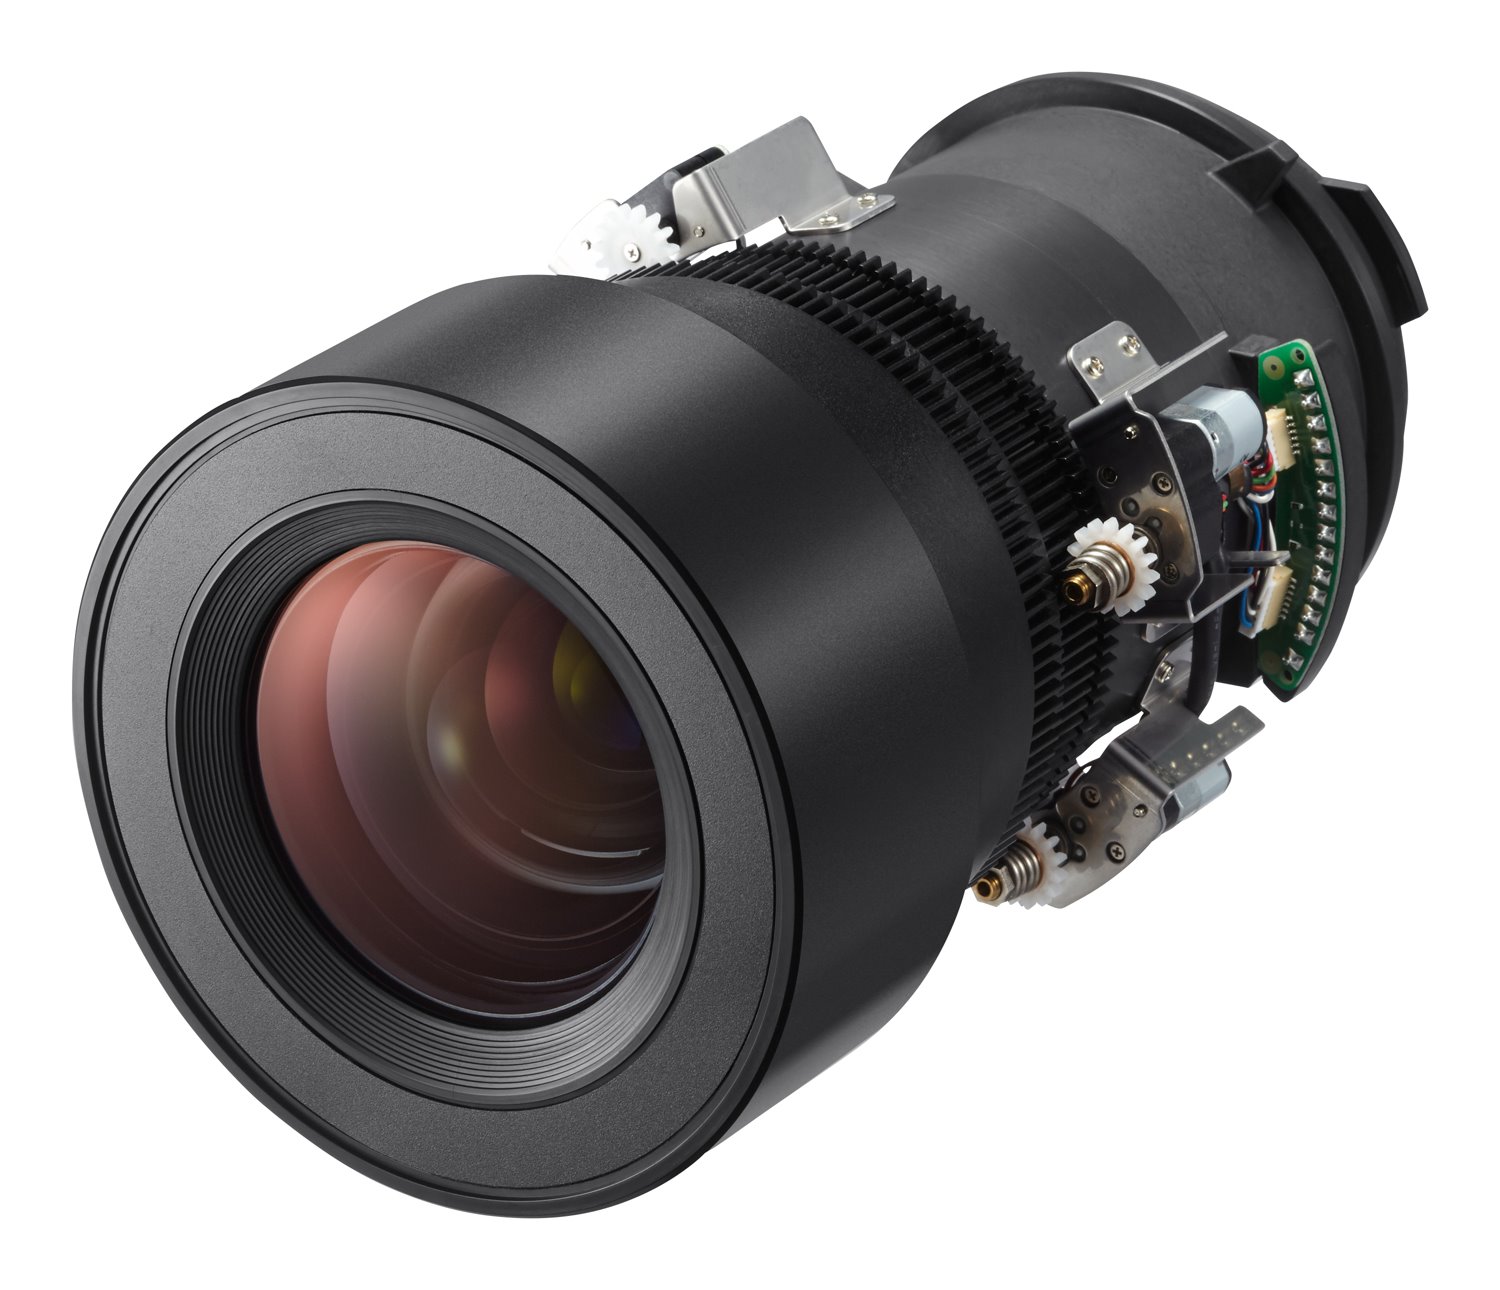 NEC Display - Long Throw Zoom Lens